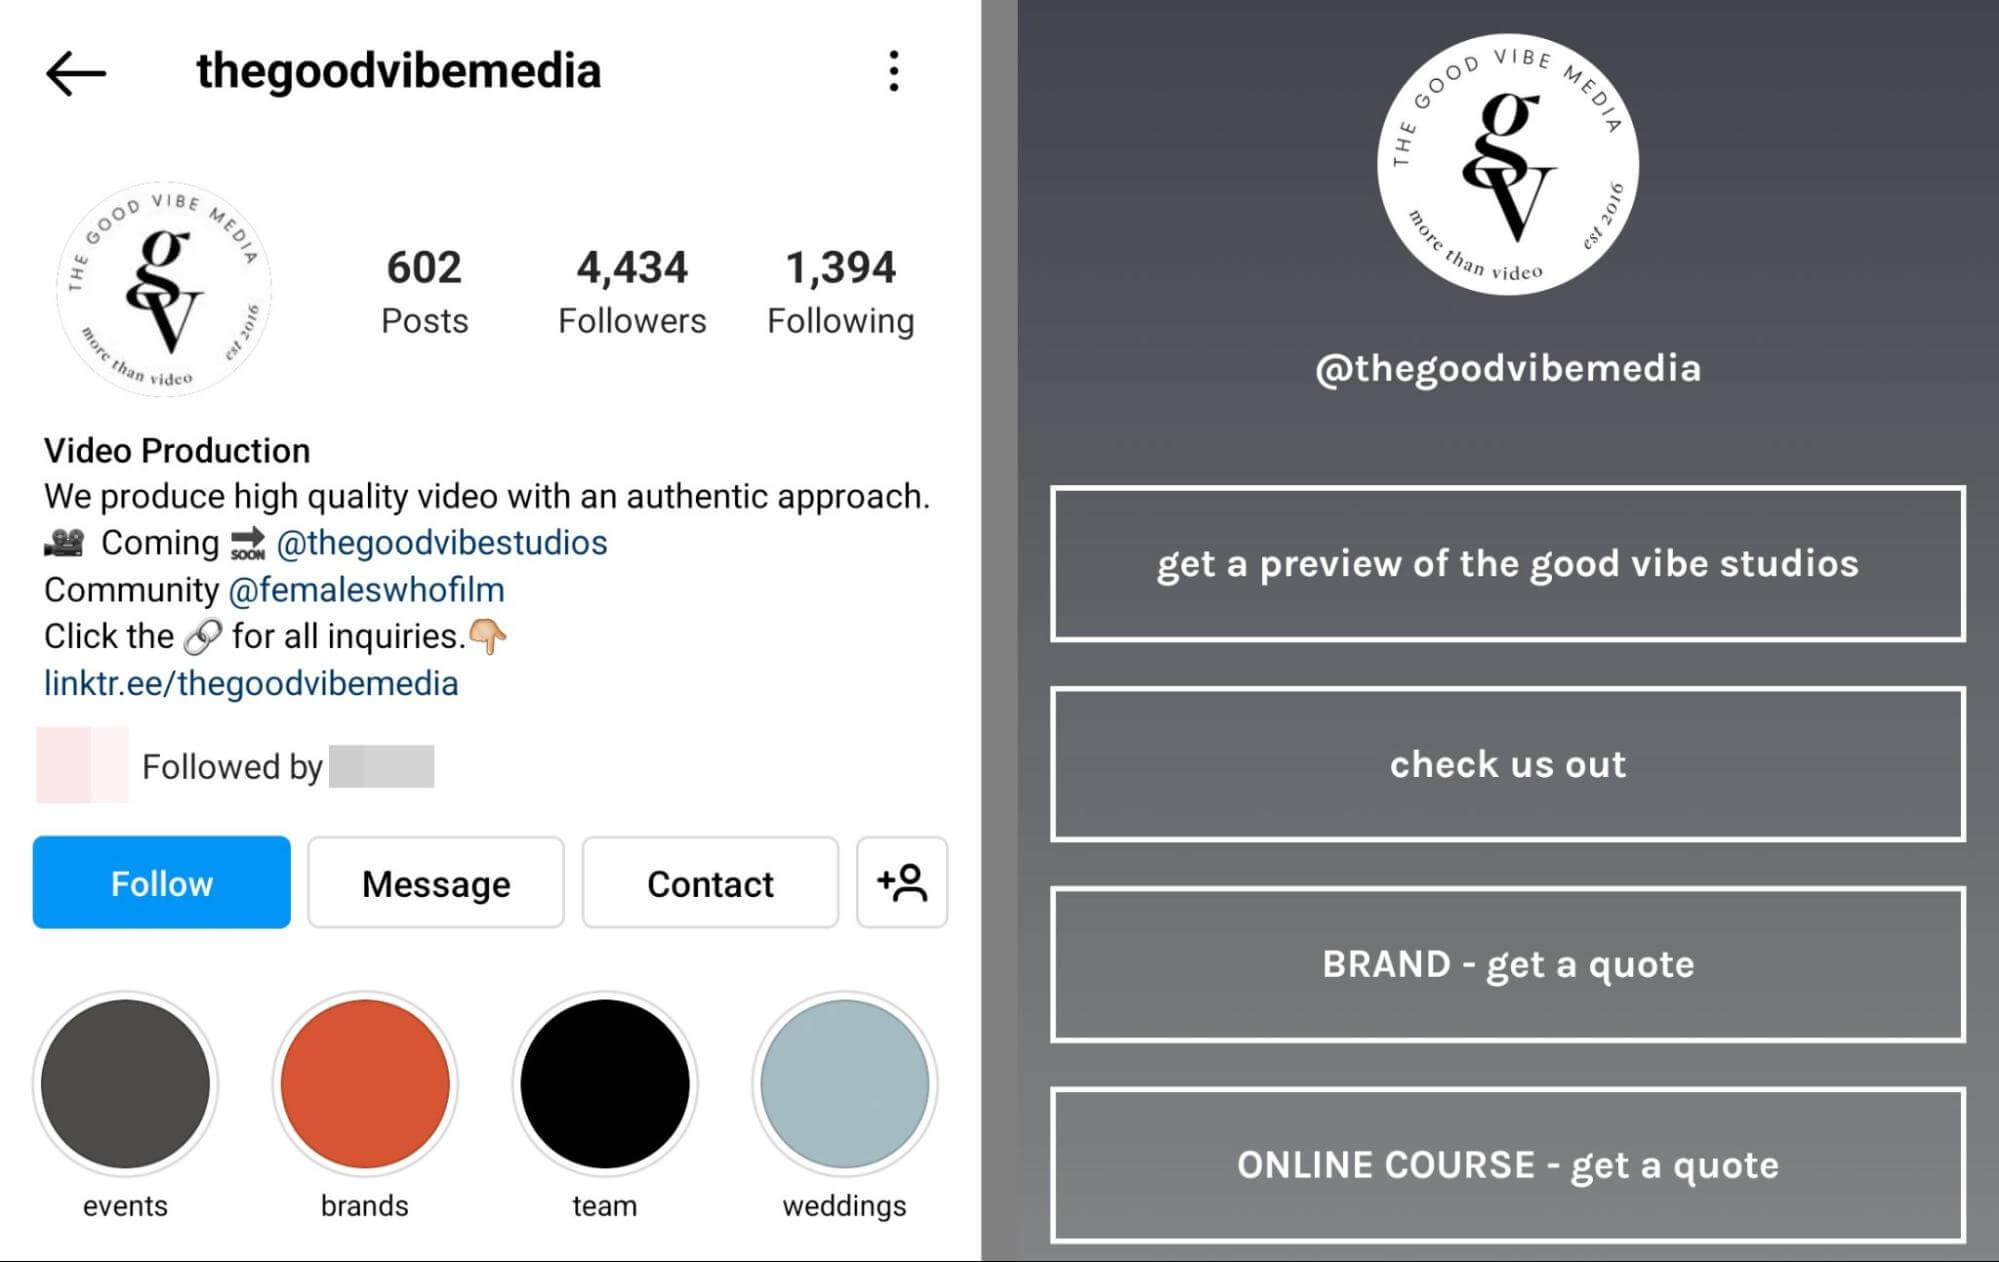 instagram-bio-thegoodvibemedia-media-entertainment-company-example